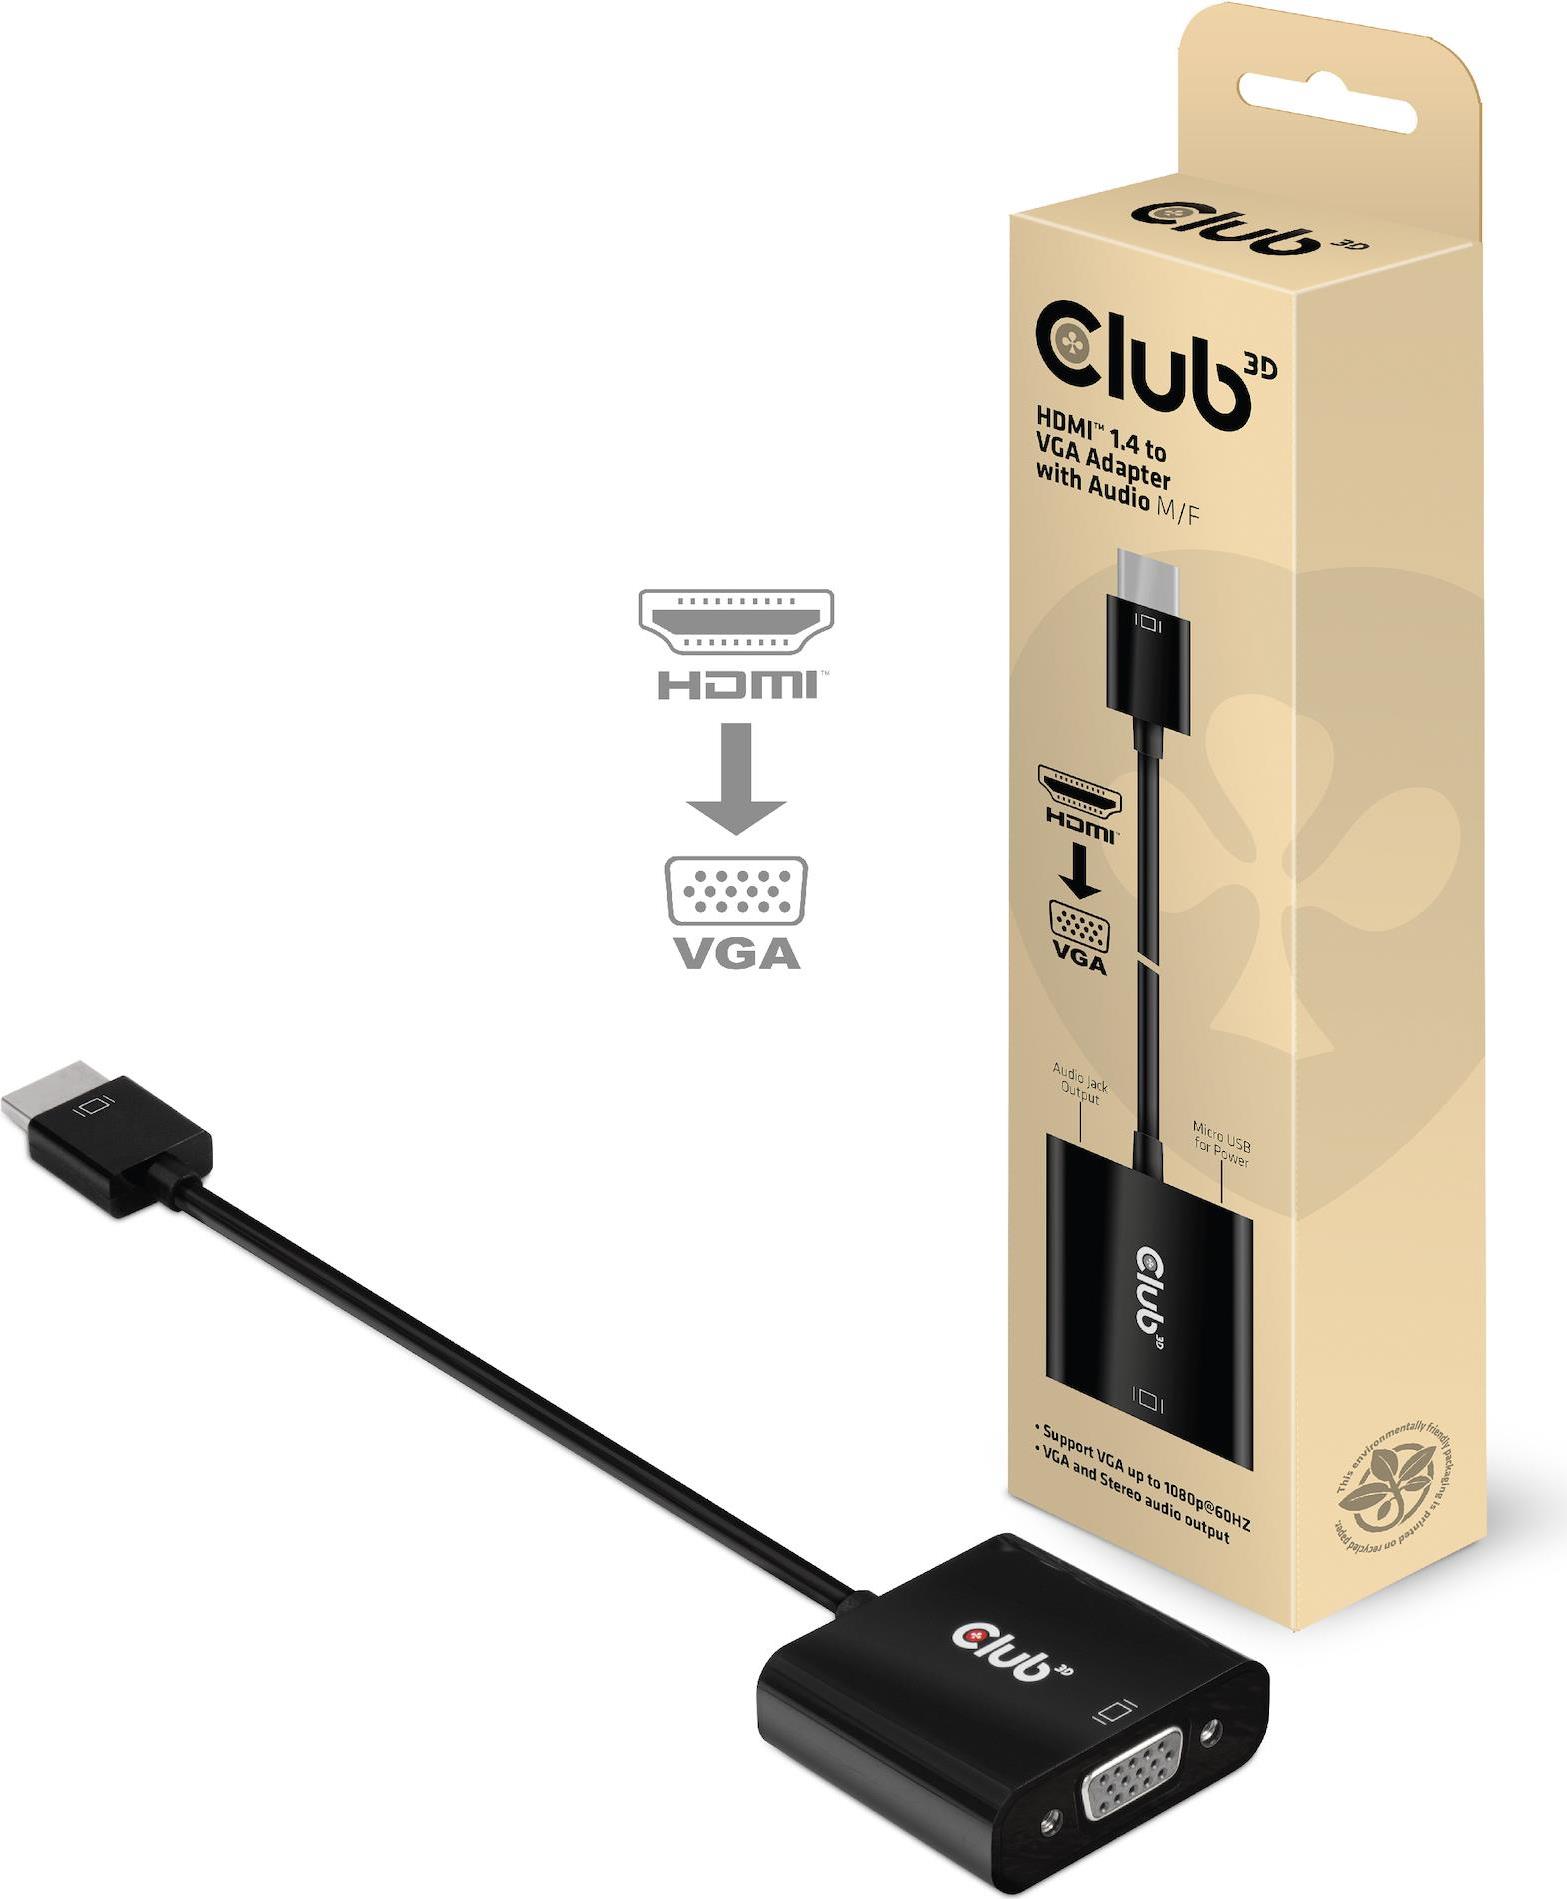 Club 3D CAC-1302 - Videoschnittstellen-Converter - HDMI / VGA - HDMI (M) bis HD-15 (VGA), Stereo Mini-Klinkenstecker, Micro-USB Type B - 1080p-Unterstützung, active converter